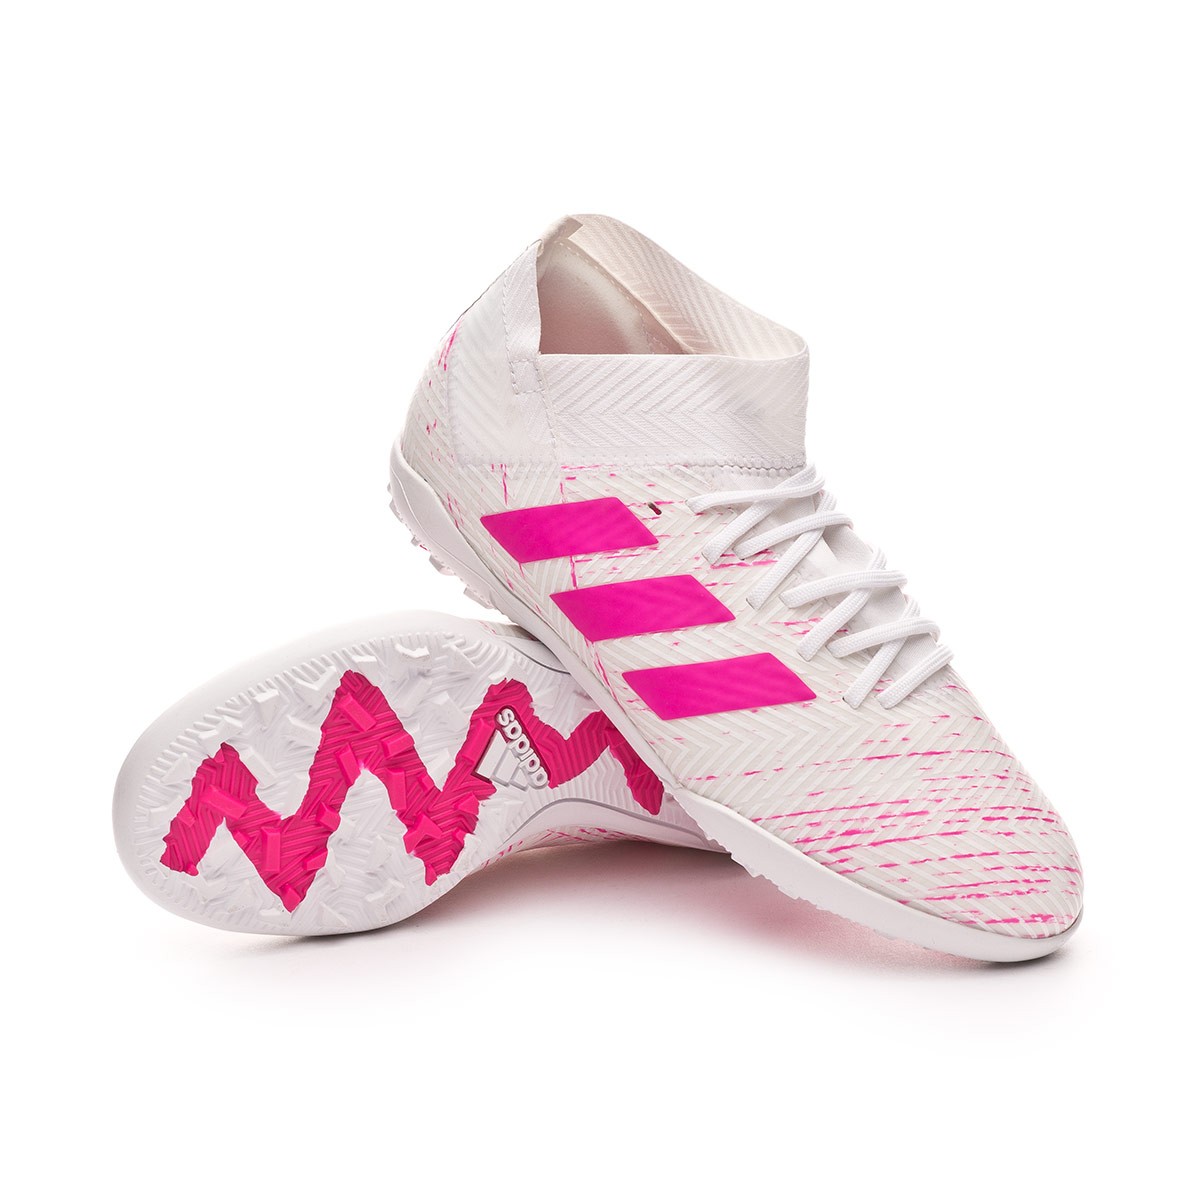 adidas nemeziz white and pink